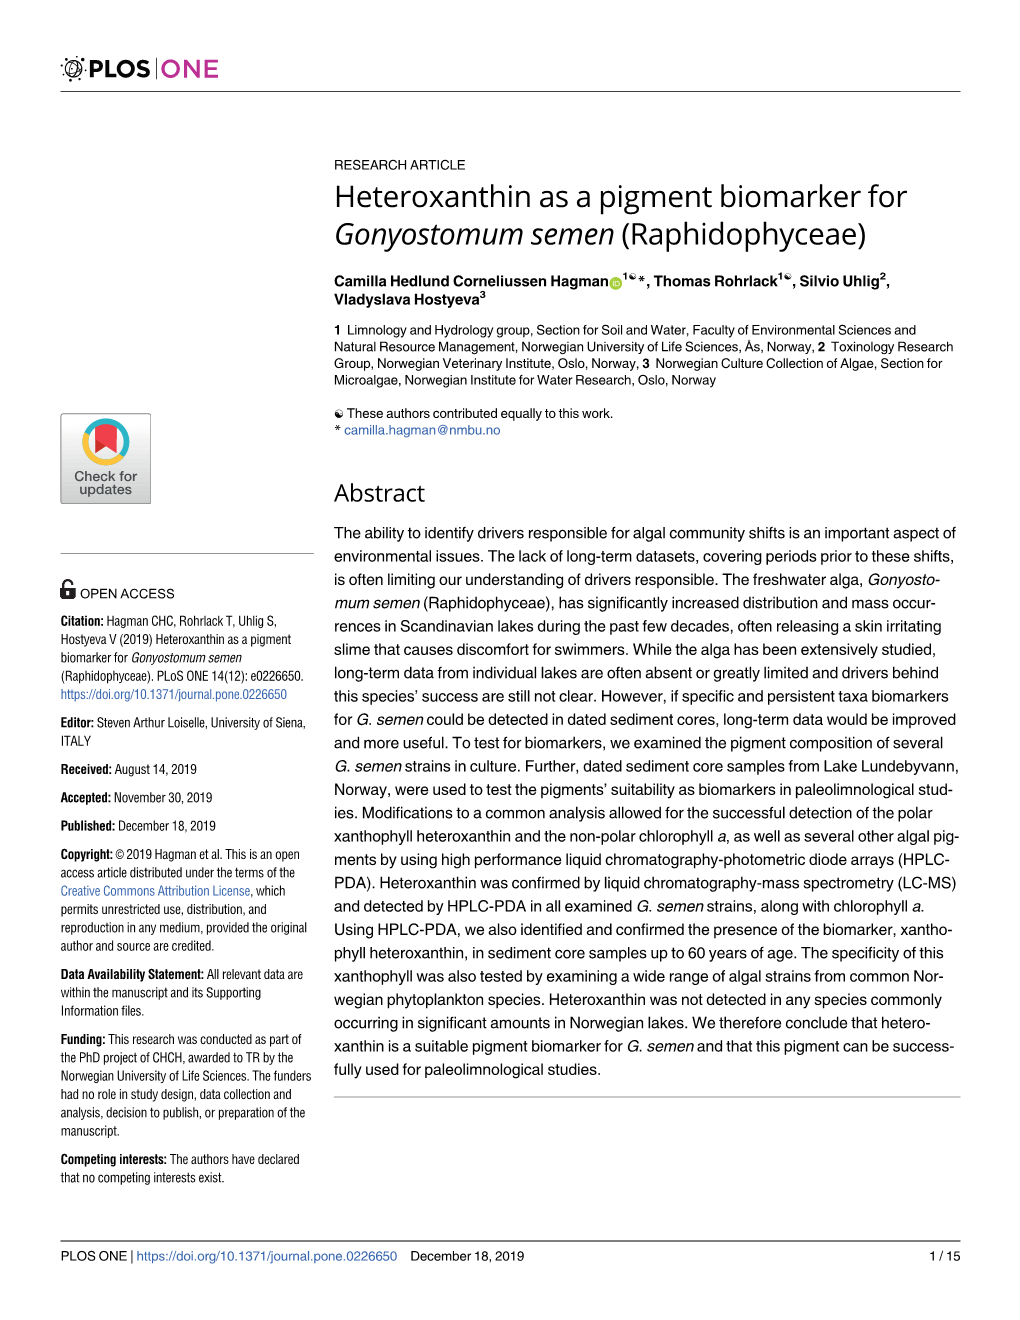 Heteroxanthin As a Pigment Biomarker for Gonyostomum Semen (Raphidophyceae)